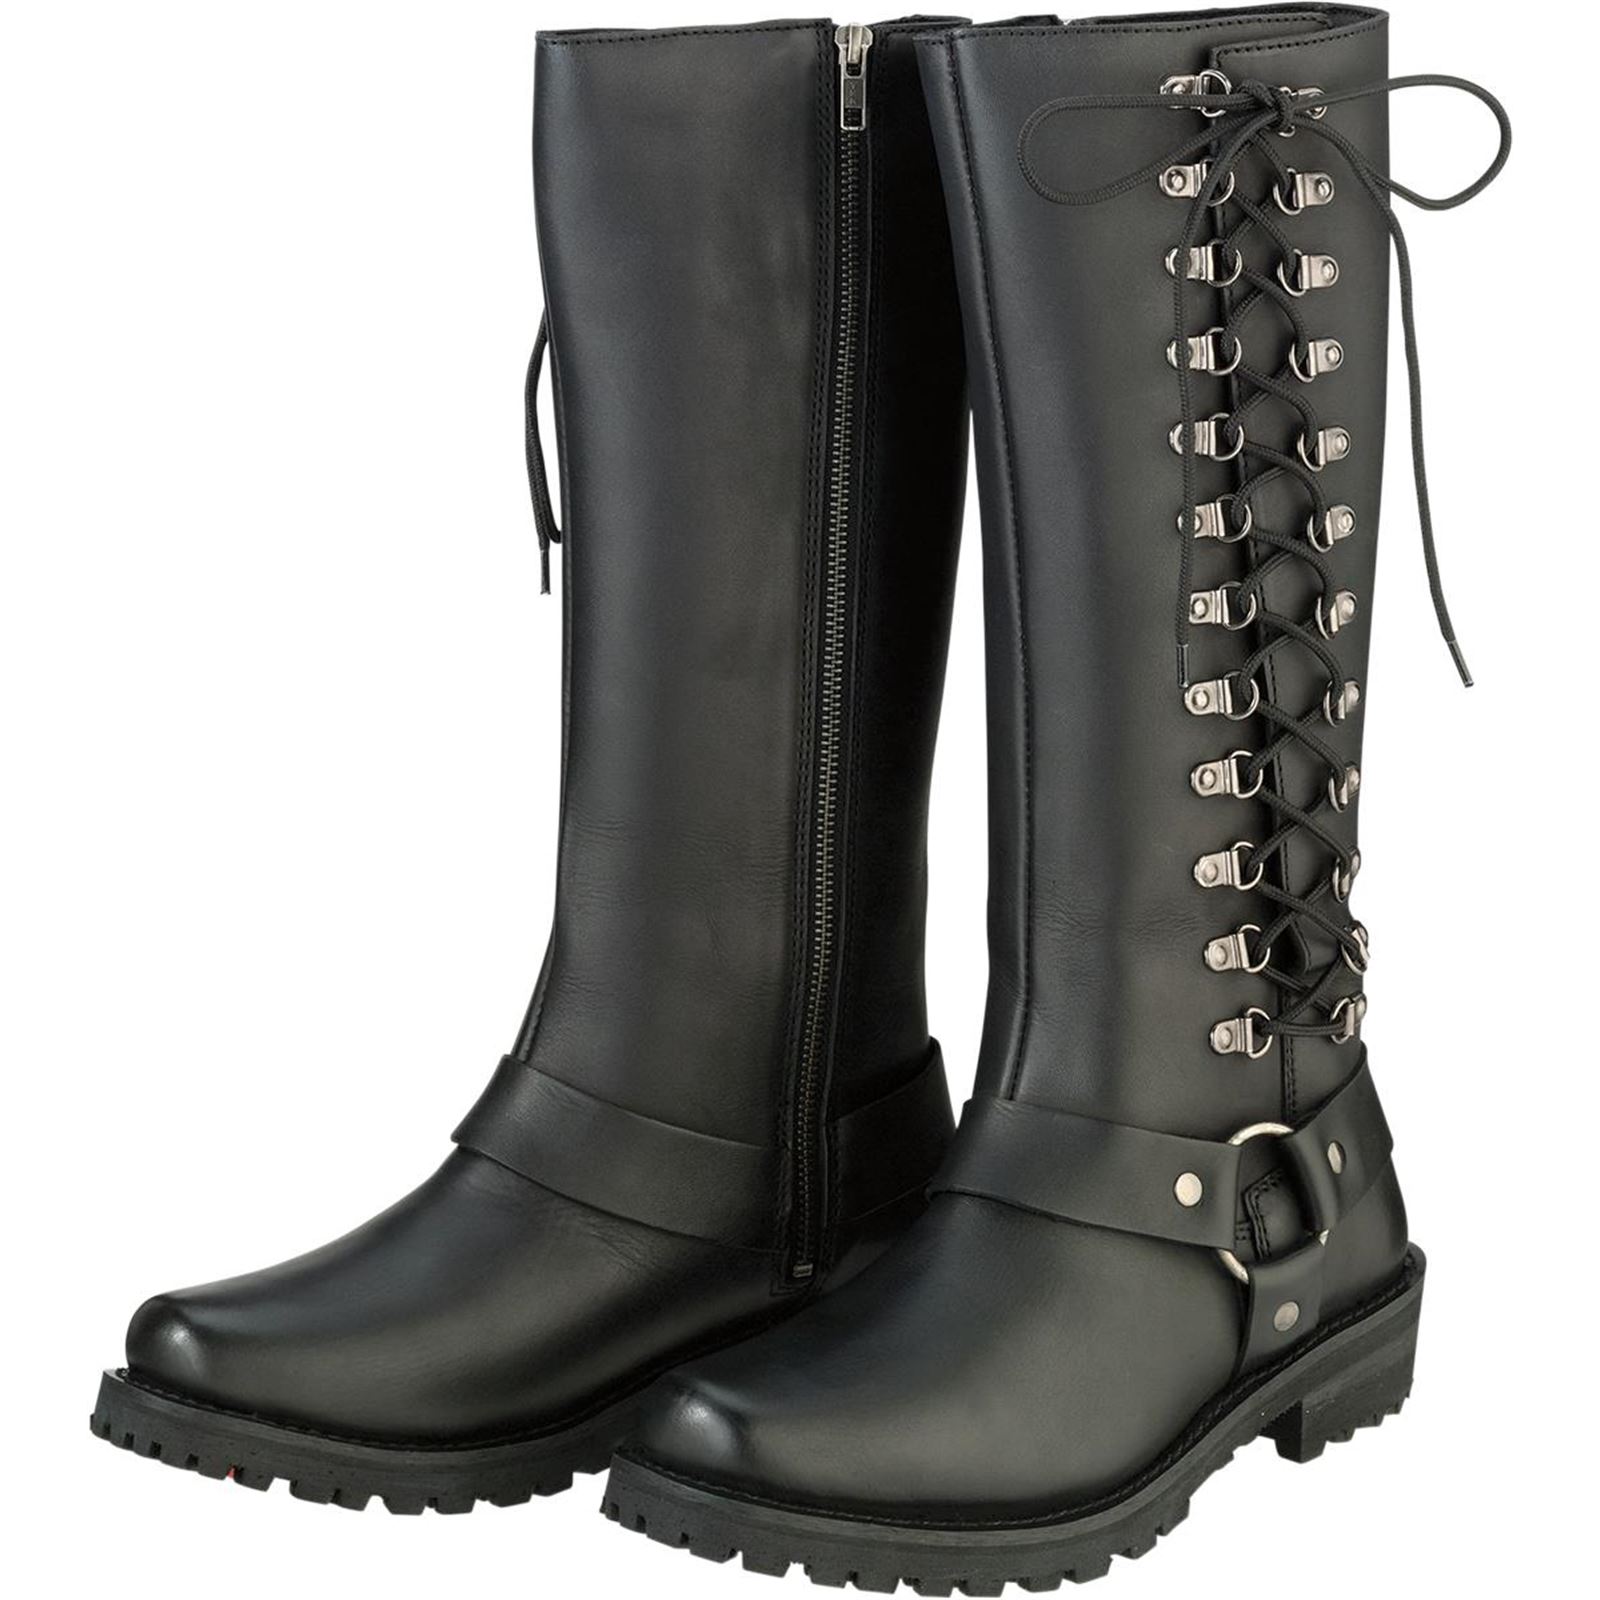 Z1R Women's Savage Boots - Black - Size 7